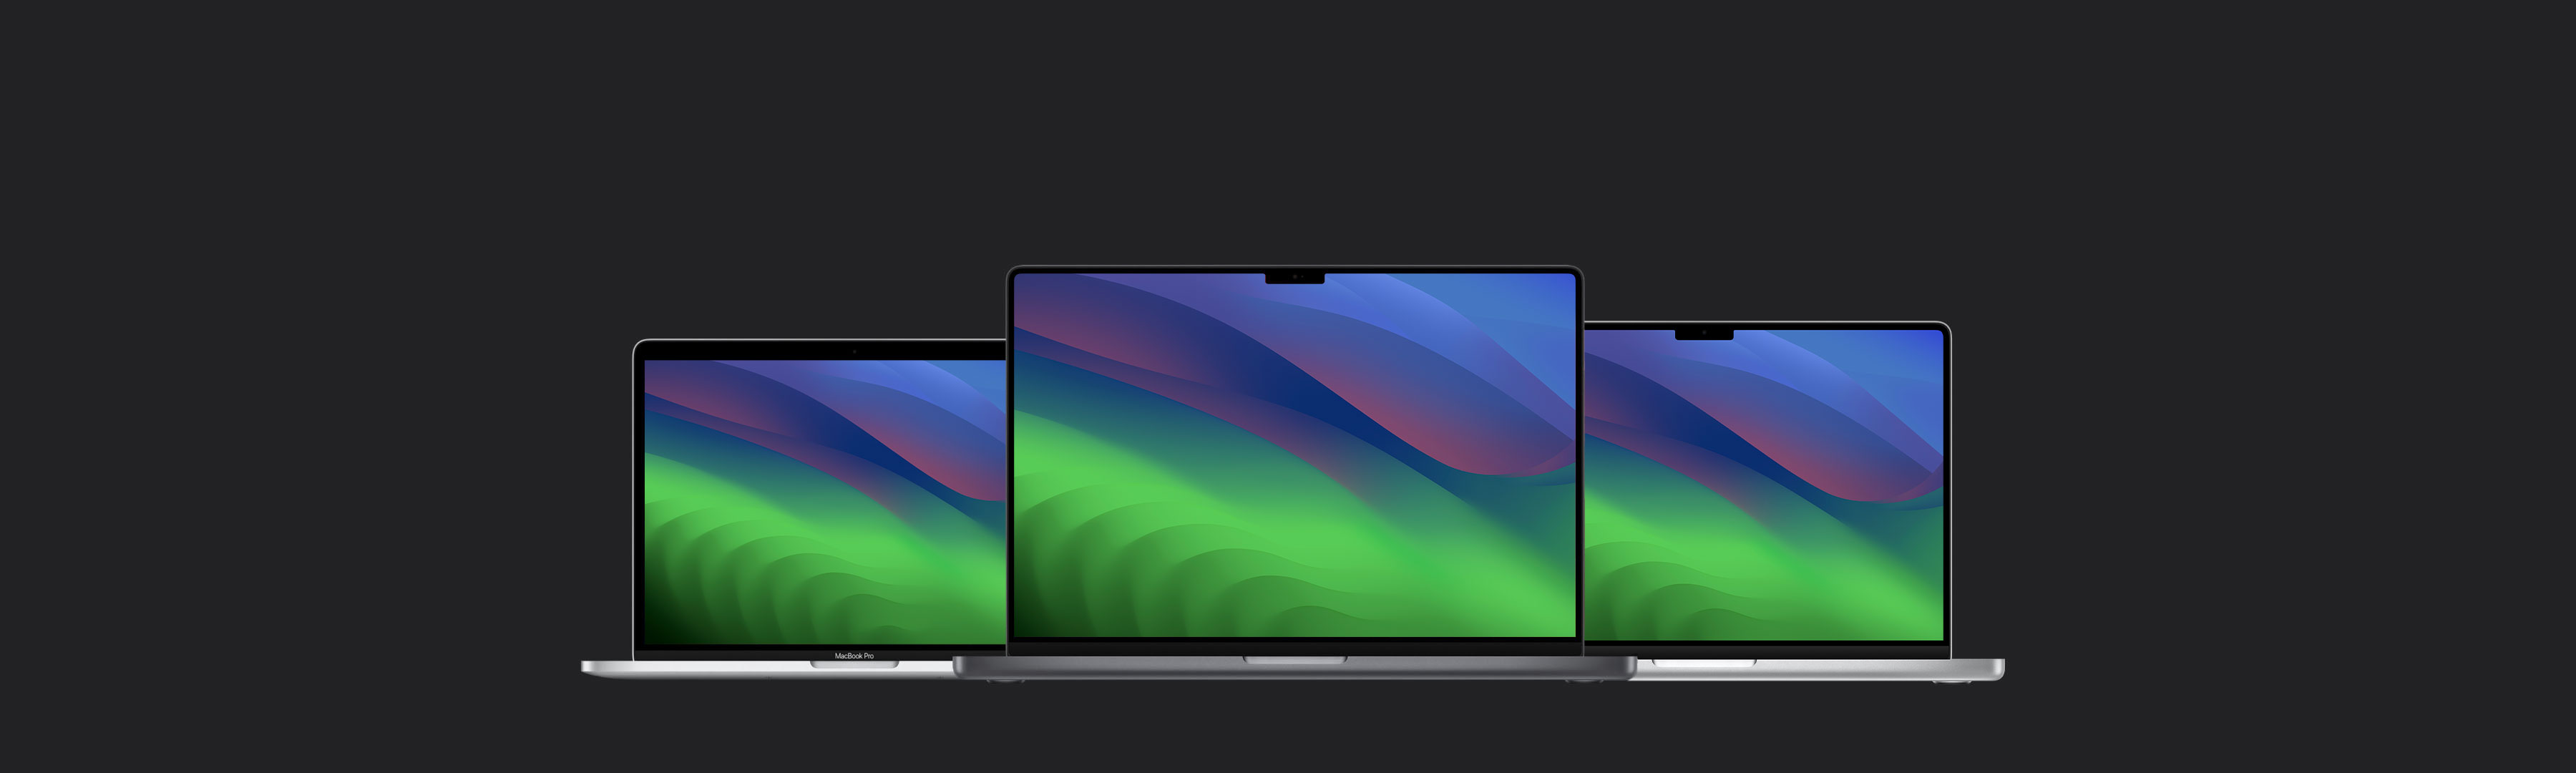 Mac mini – den officiella Apple-supporten